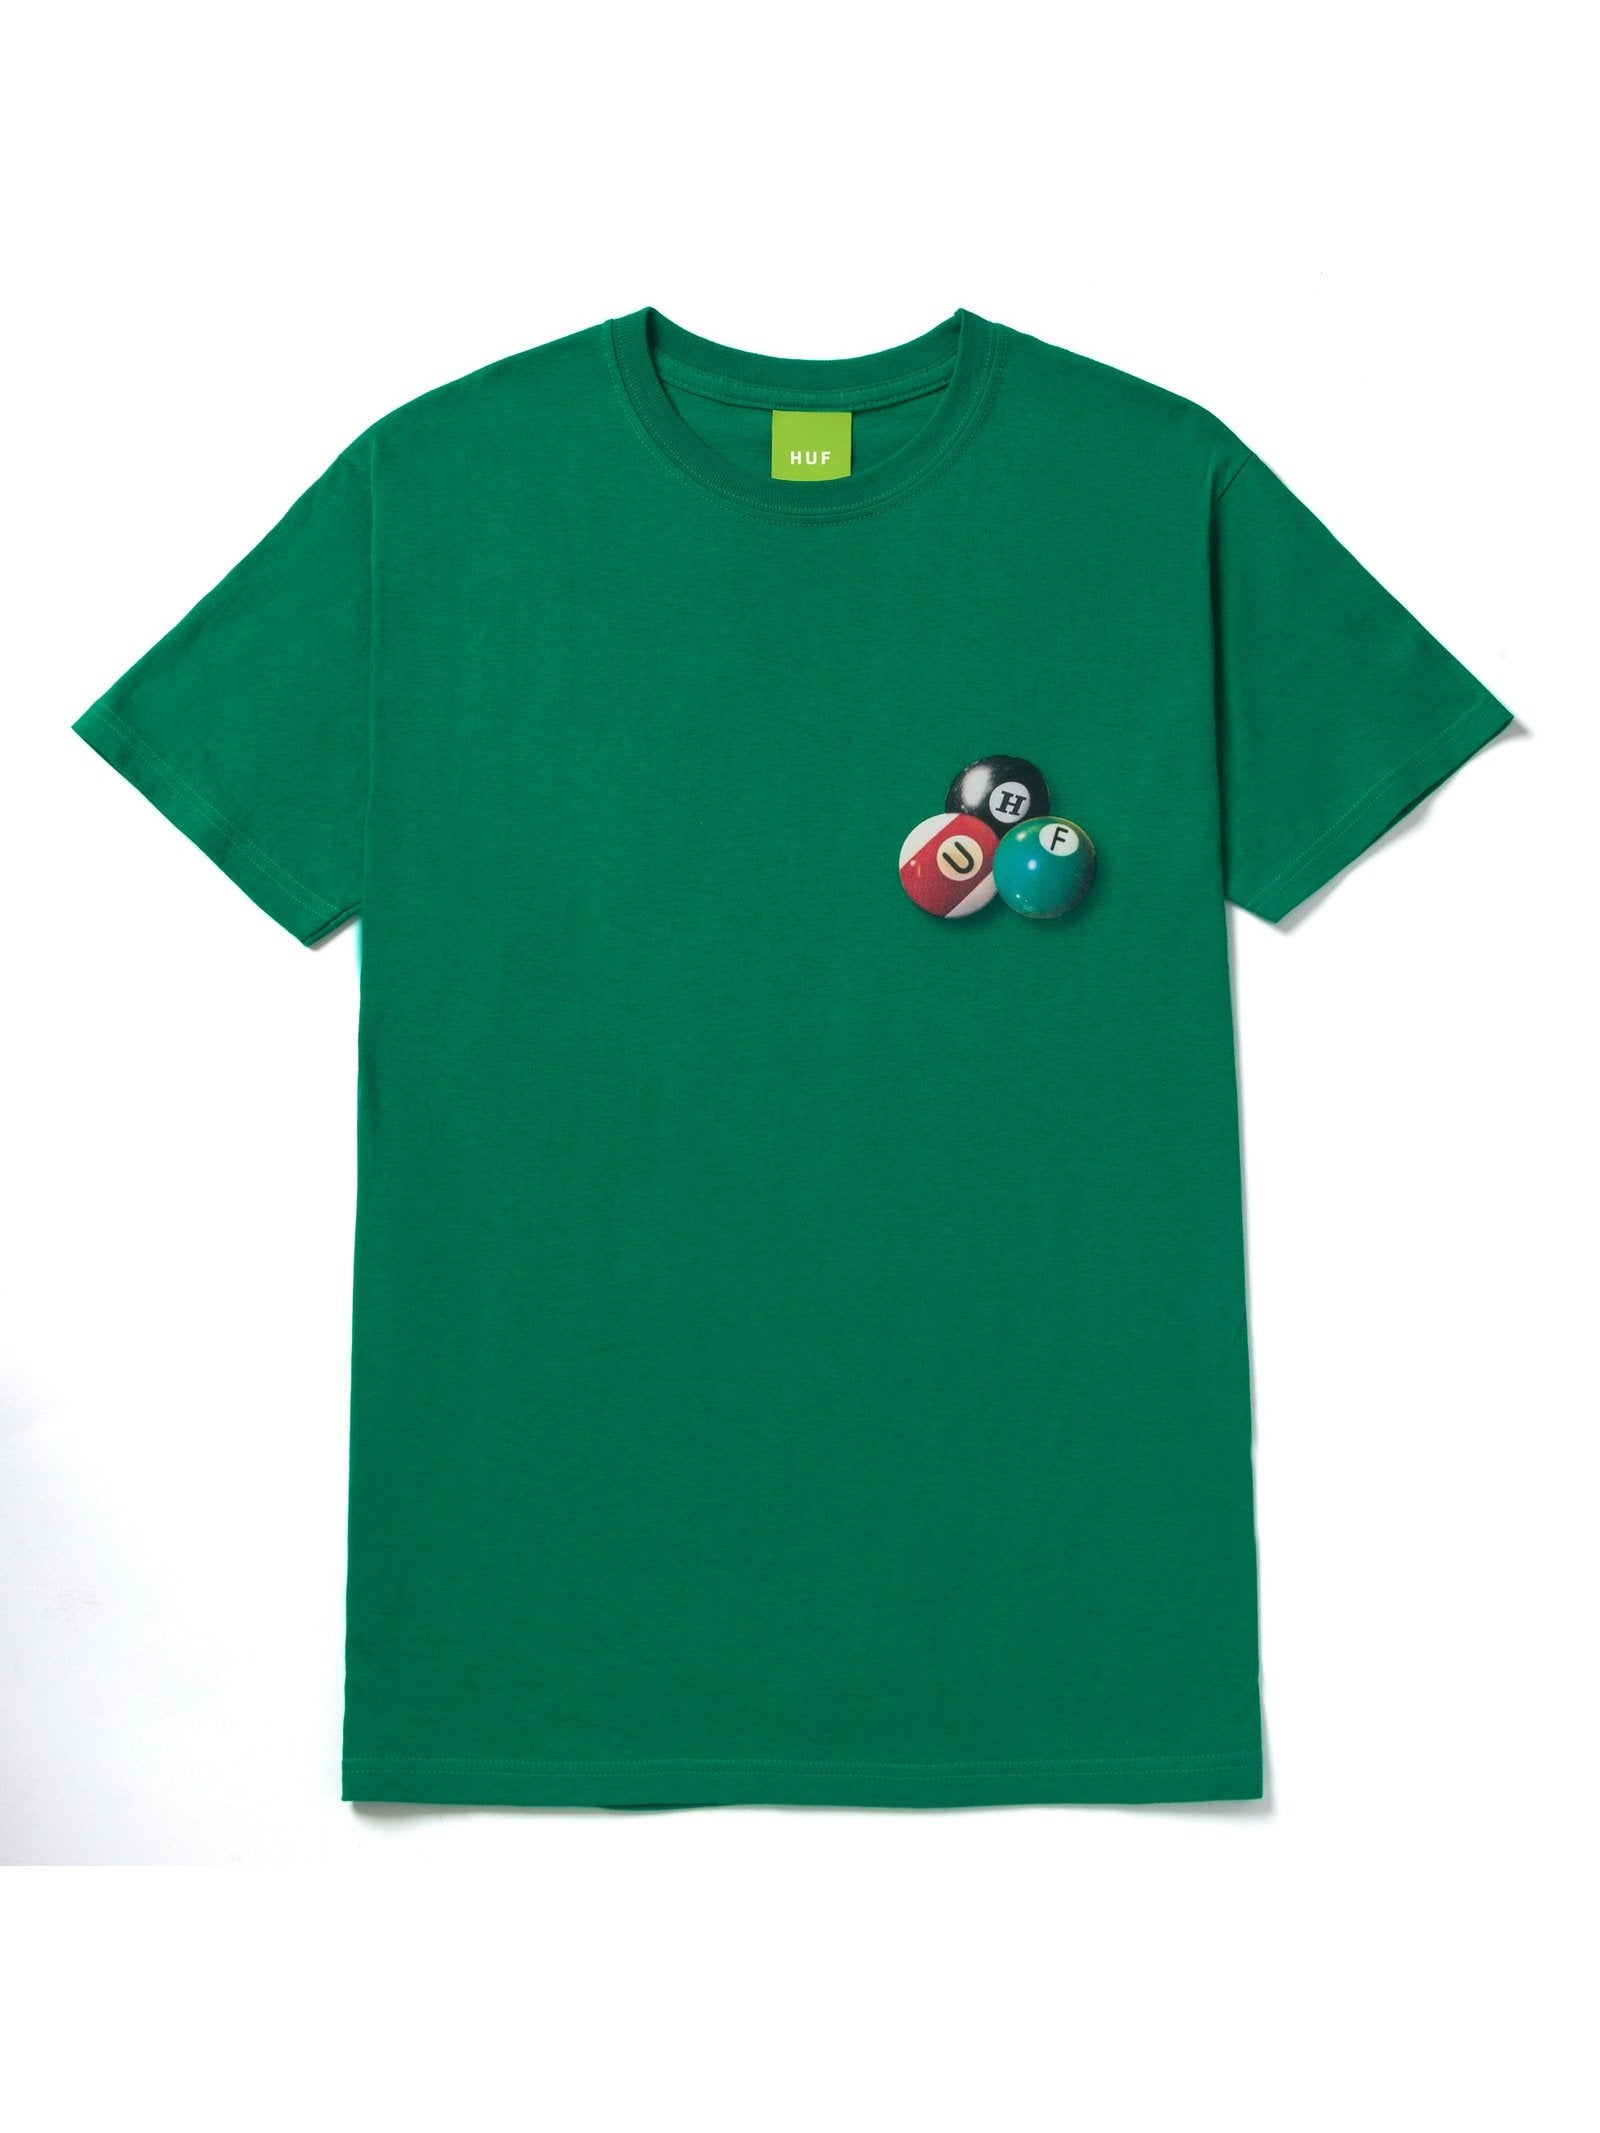 Huf Mens Dirty Pool Triple Triangle Short Sleeve T-Shirt Kelly Green TS01728.